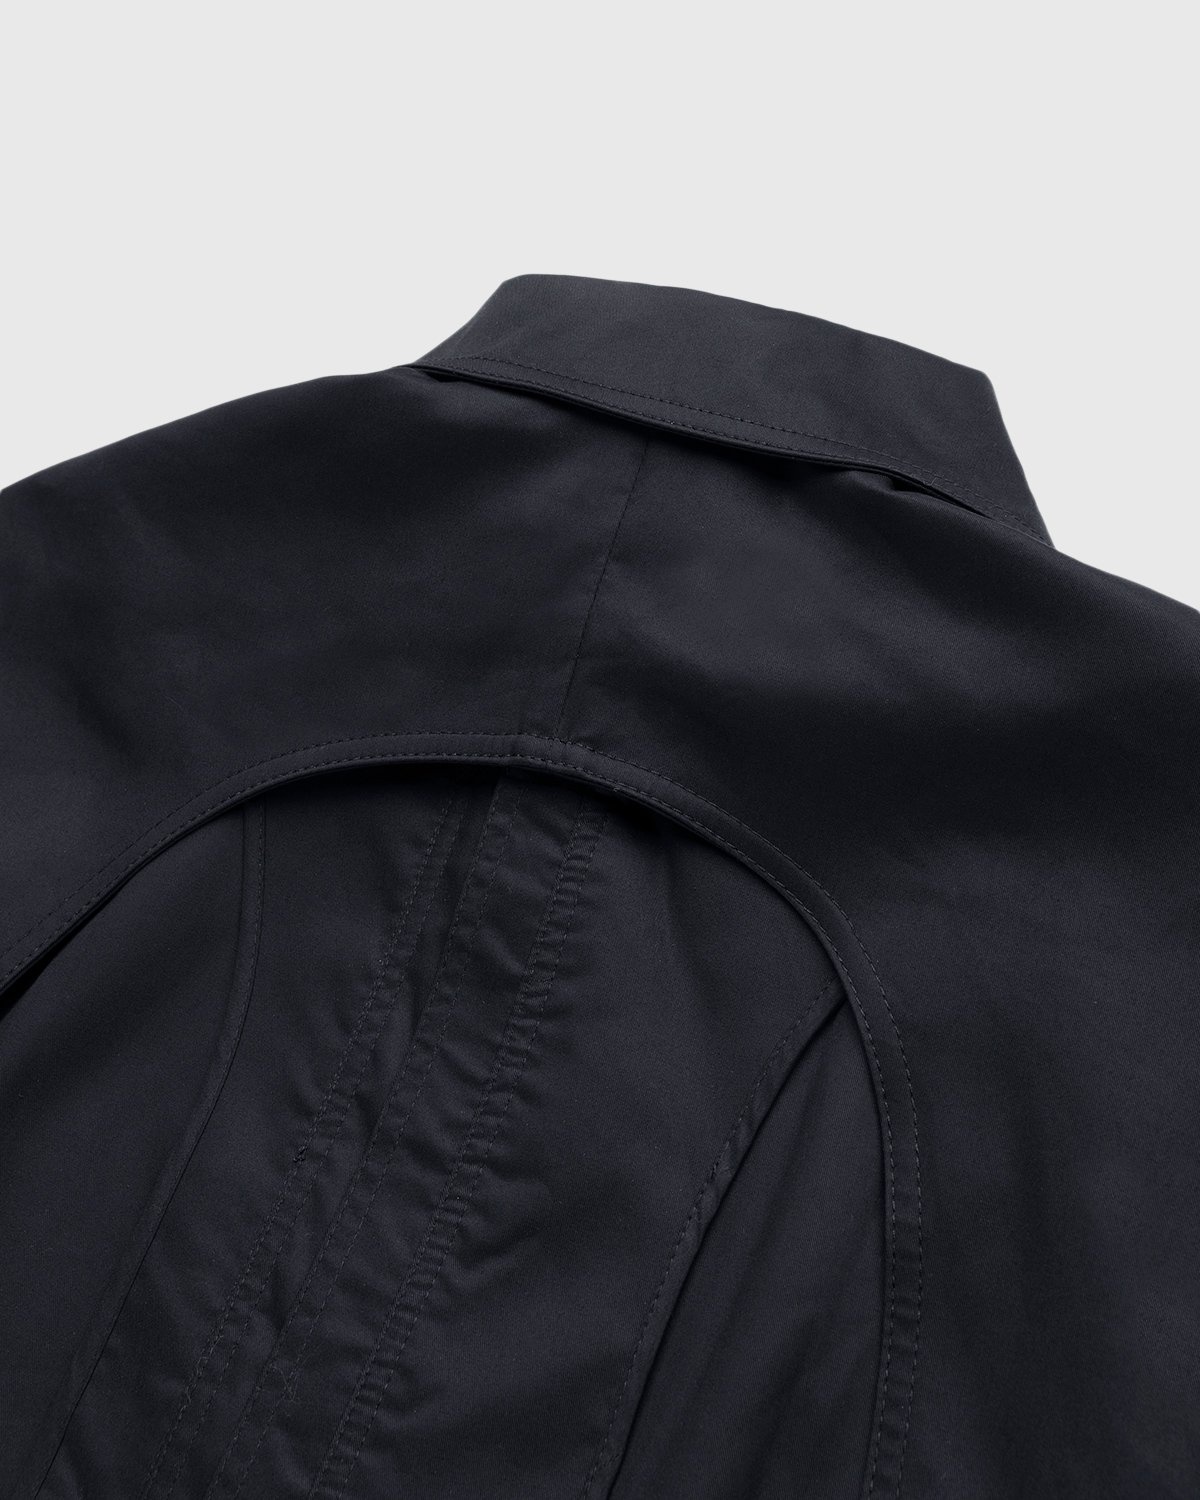 Lourdes New York – Backless Jacket Black - Outerwear - Black - Image 3